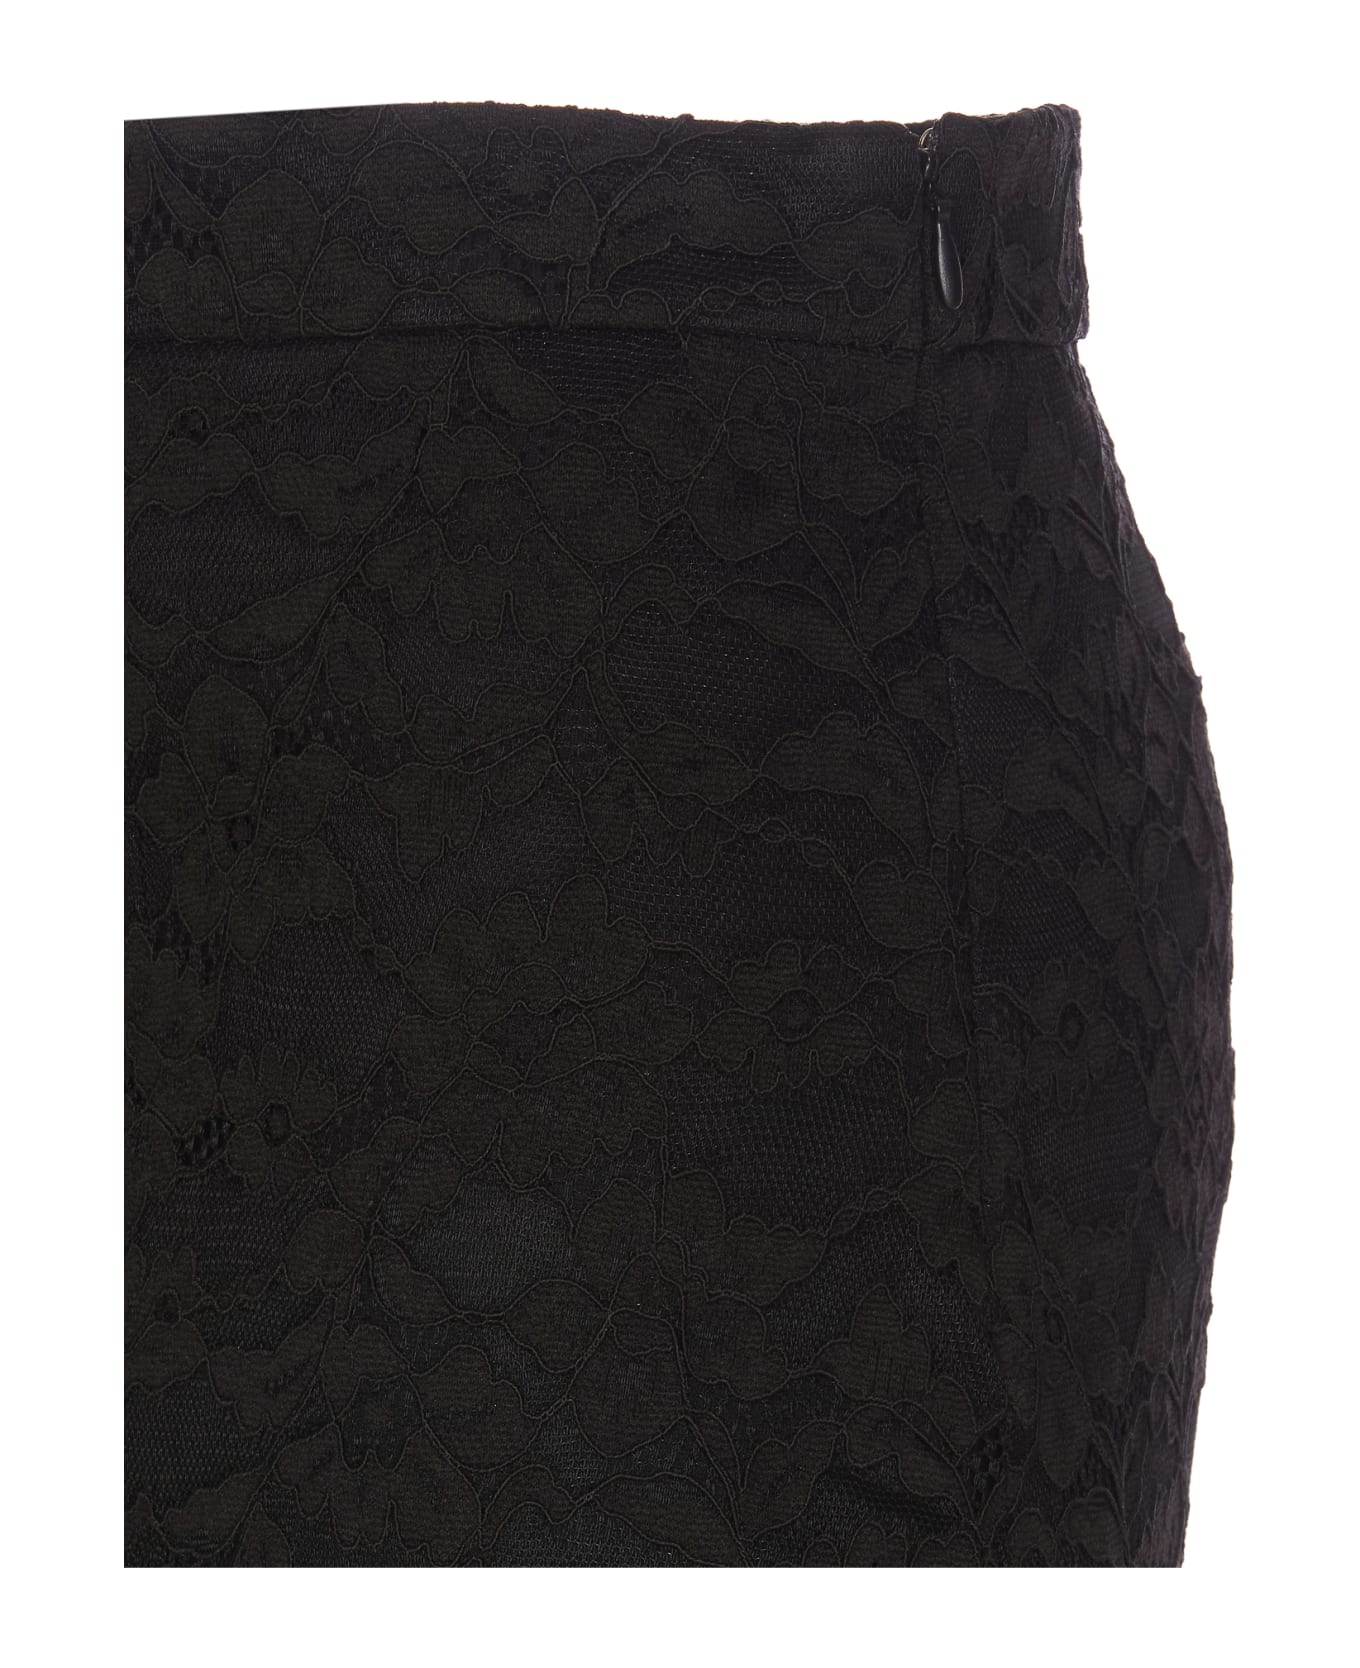 TwinSet Laces Skirt - Black